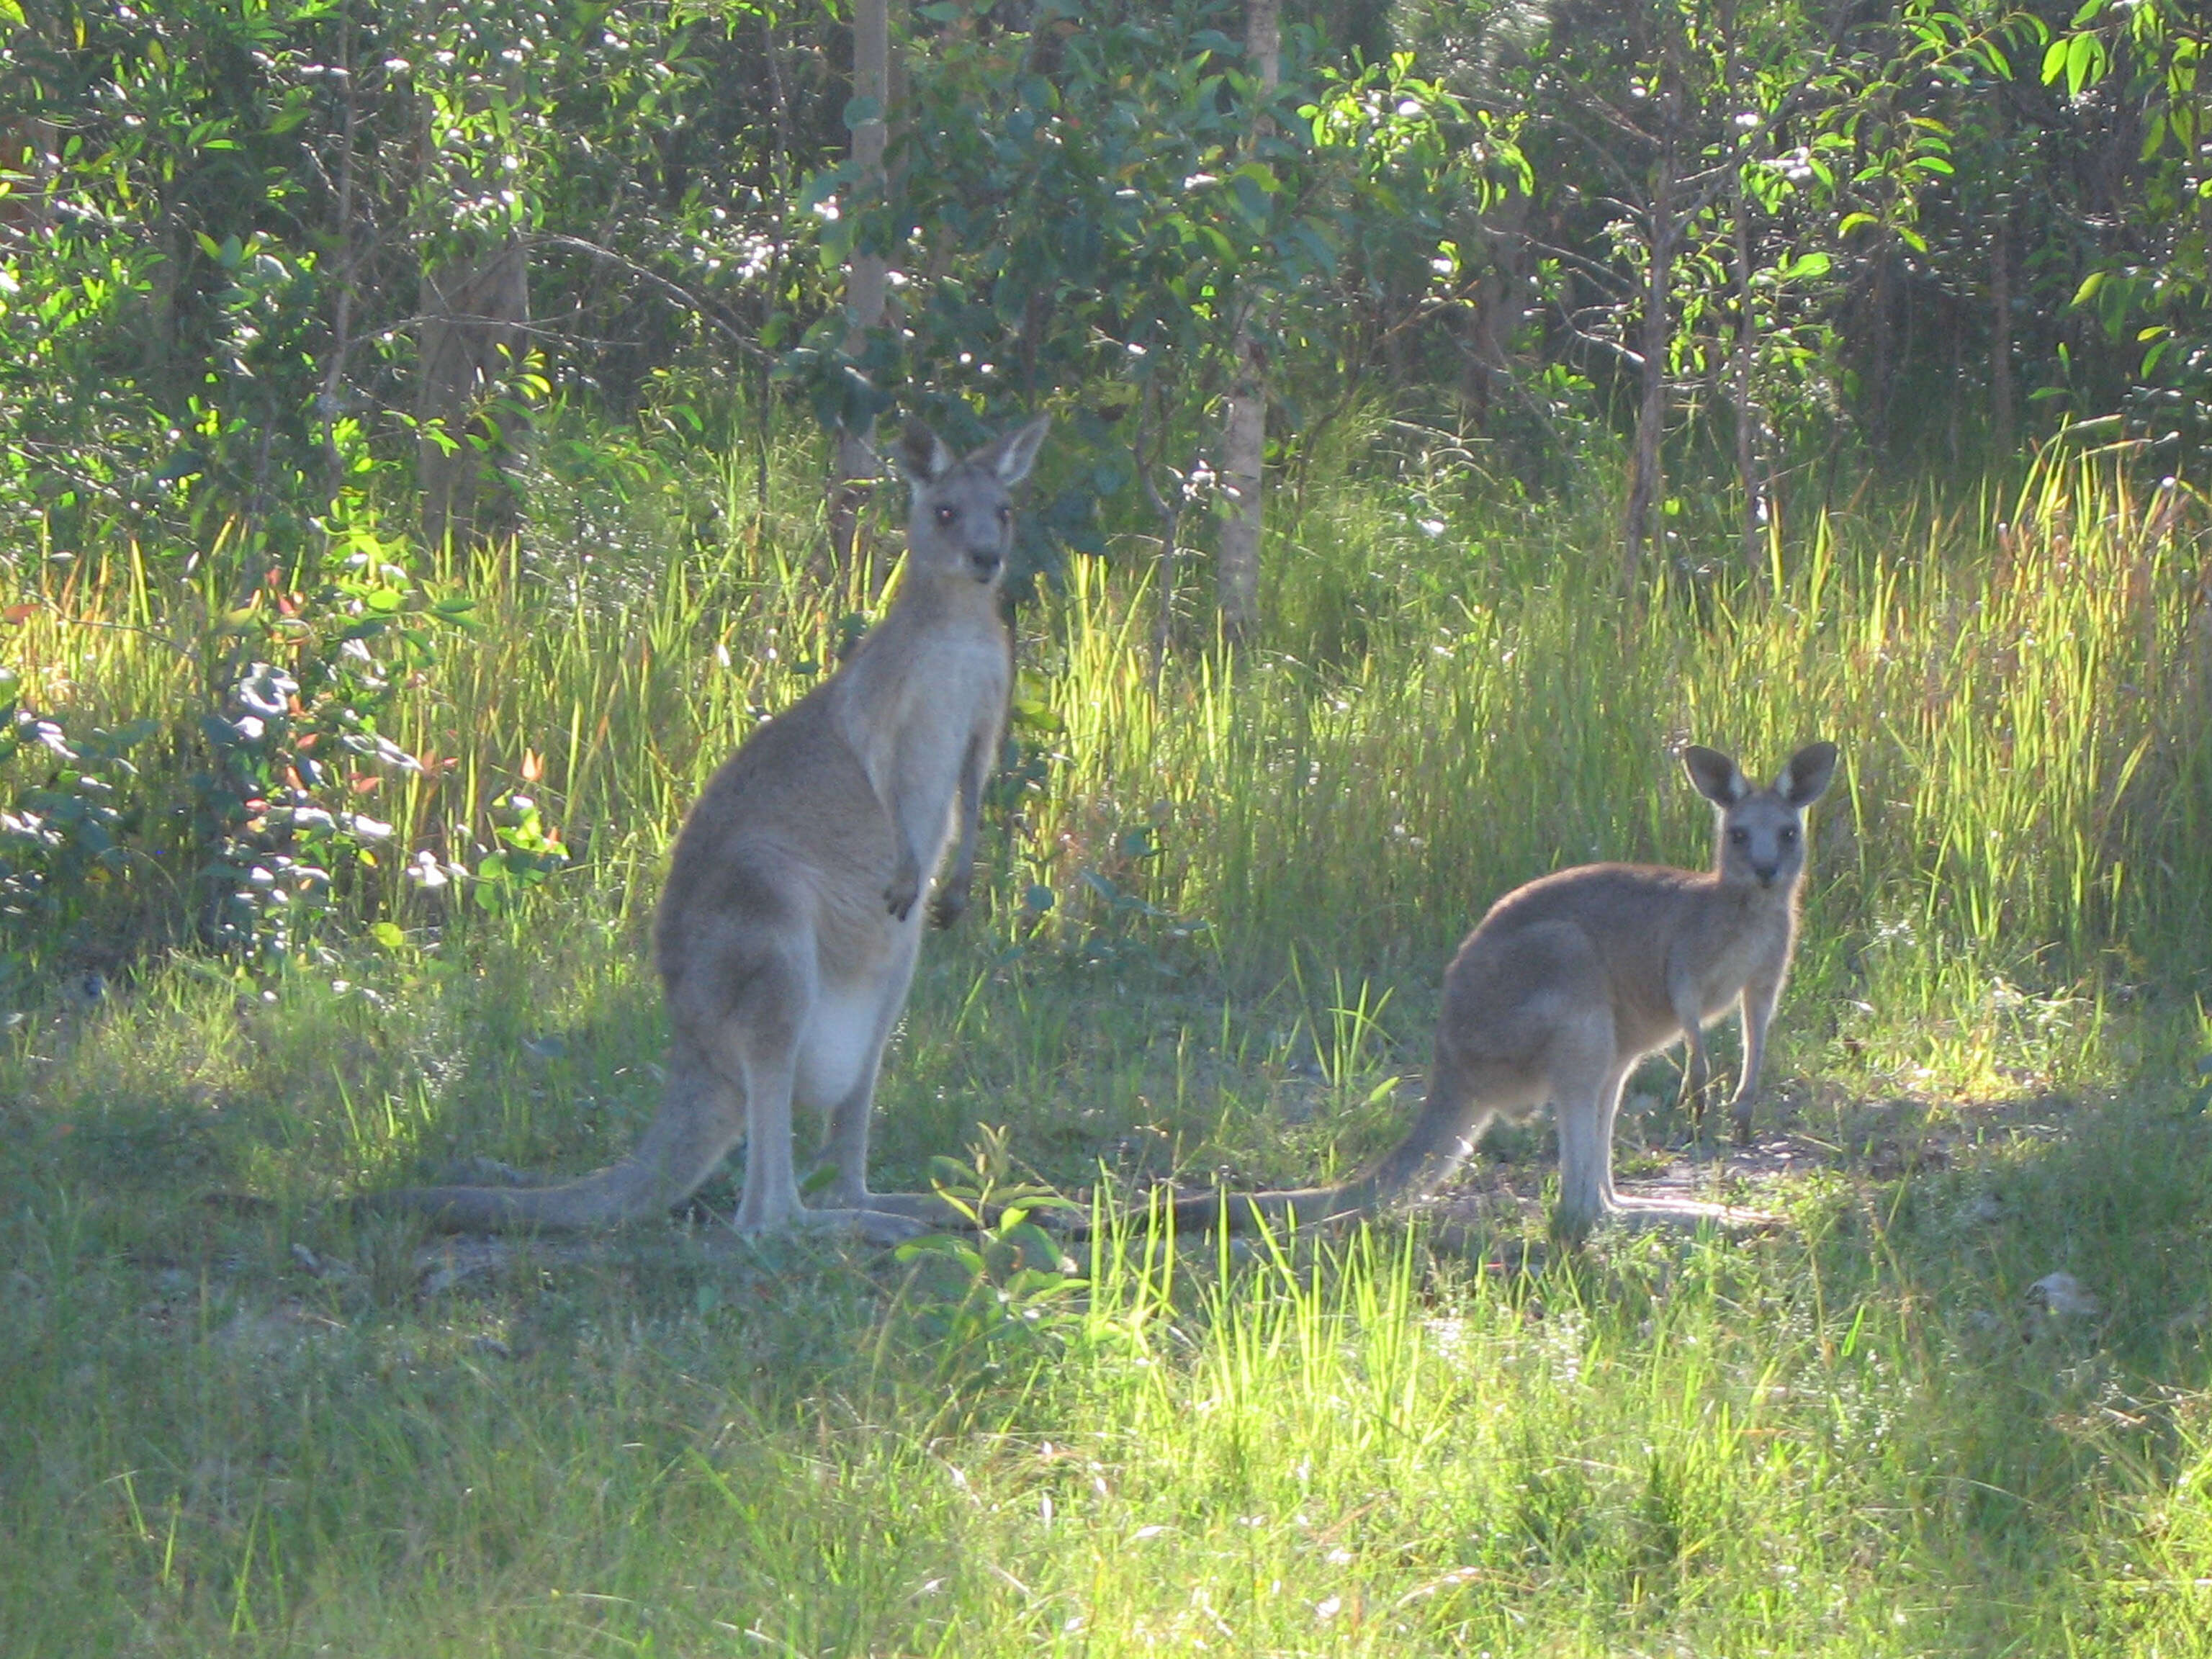 Image of kangaroo